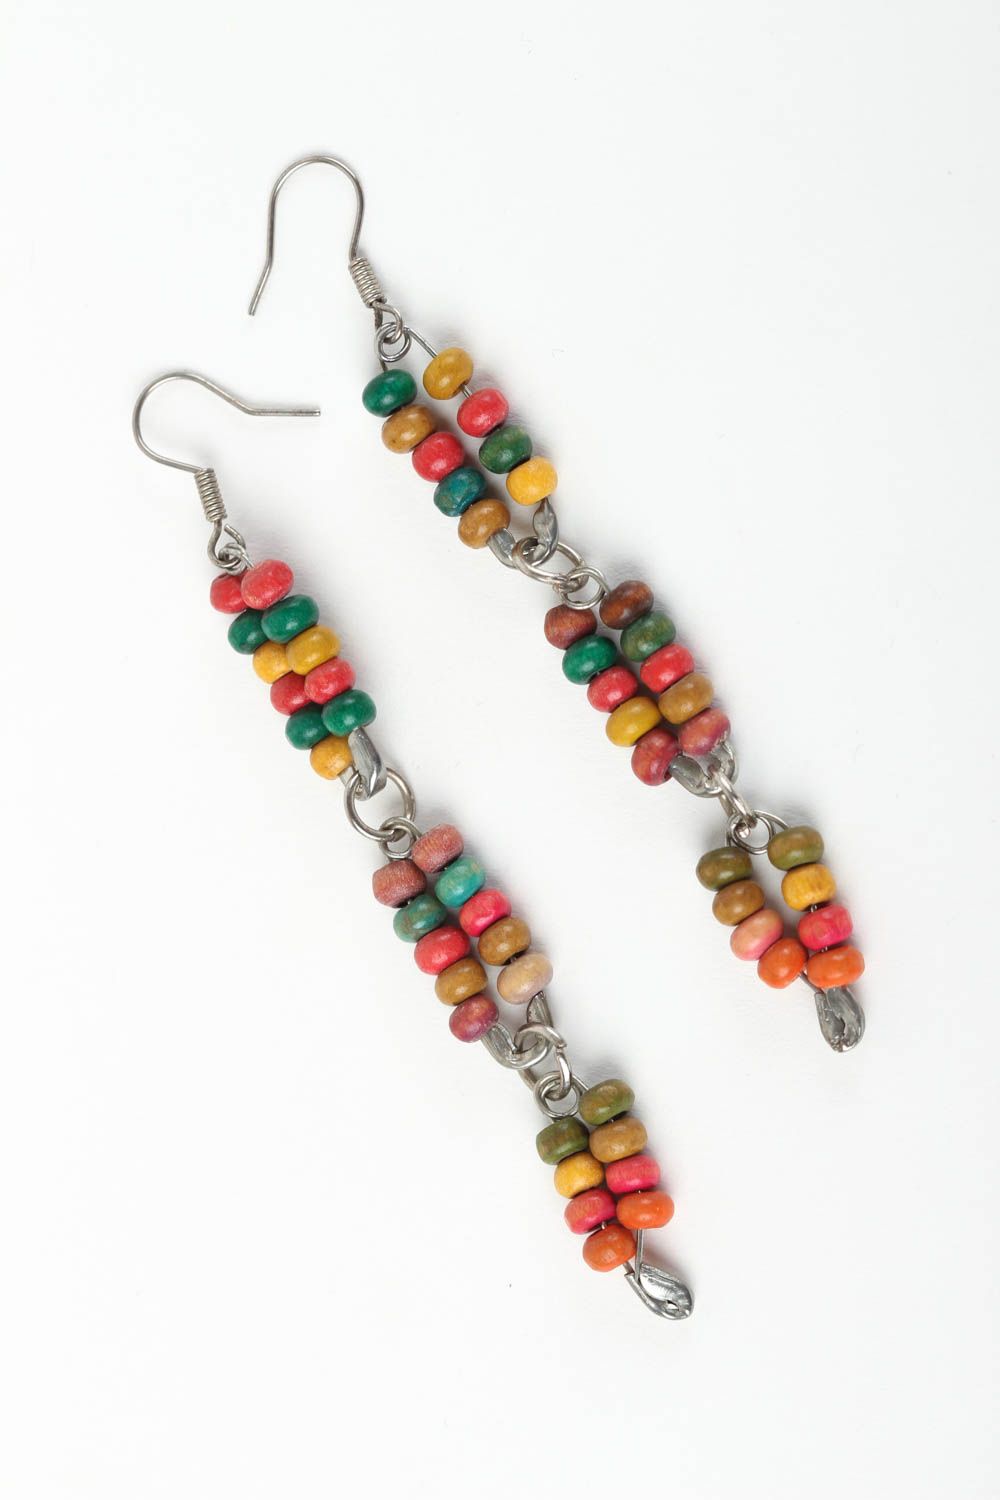 Handmade wooden earrings with charms colorful earrings long earrings gift photo 2